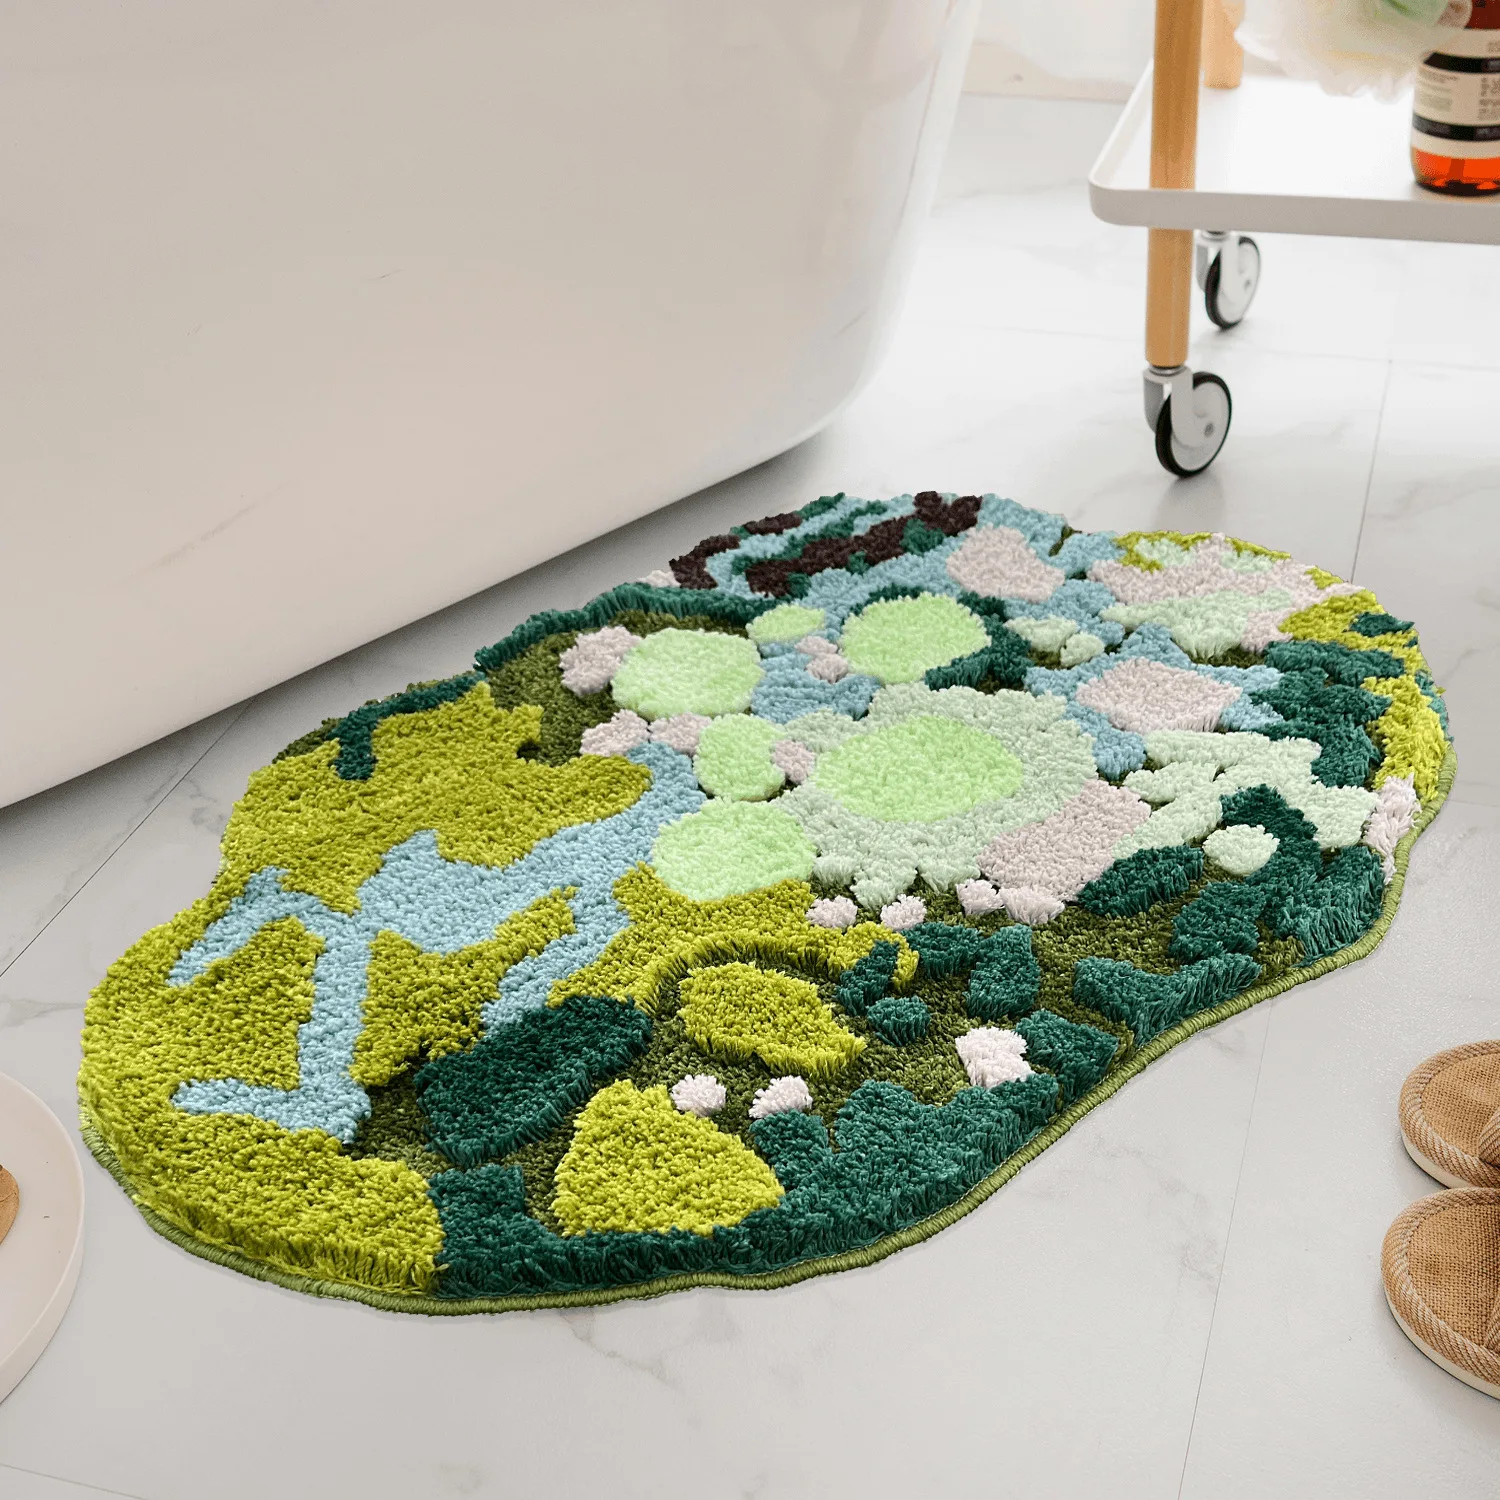 

3D Moss Tufted Rug for Kids Bedroom Carpet Non Slip Soft Absorbent Grass Bath Mat Washable Fluffy Home Decor Bathroom Doormat